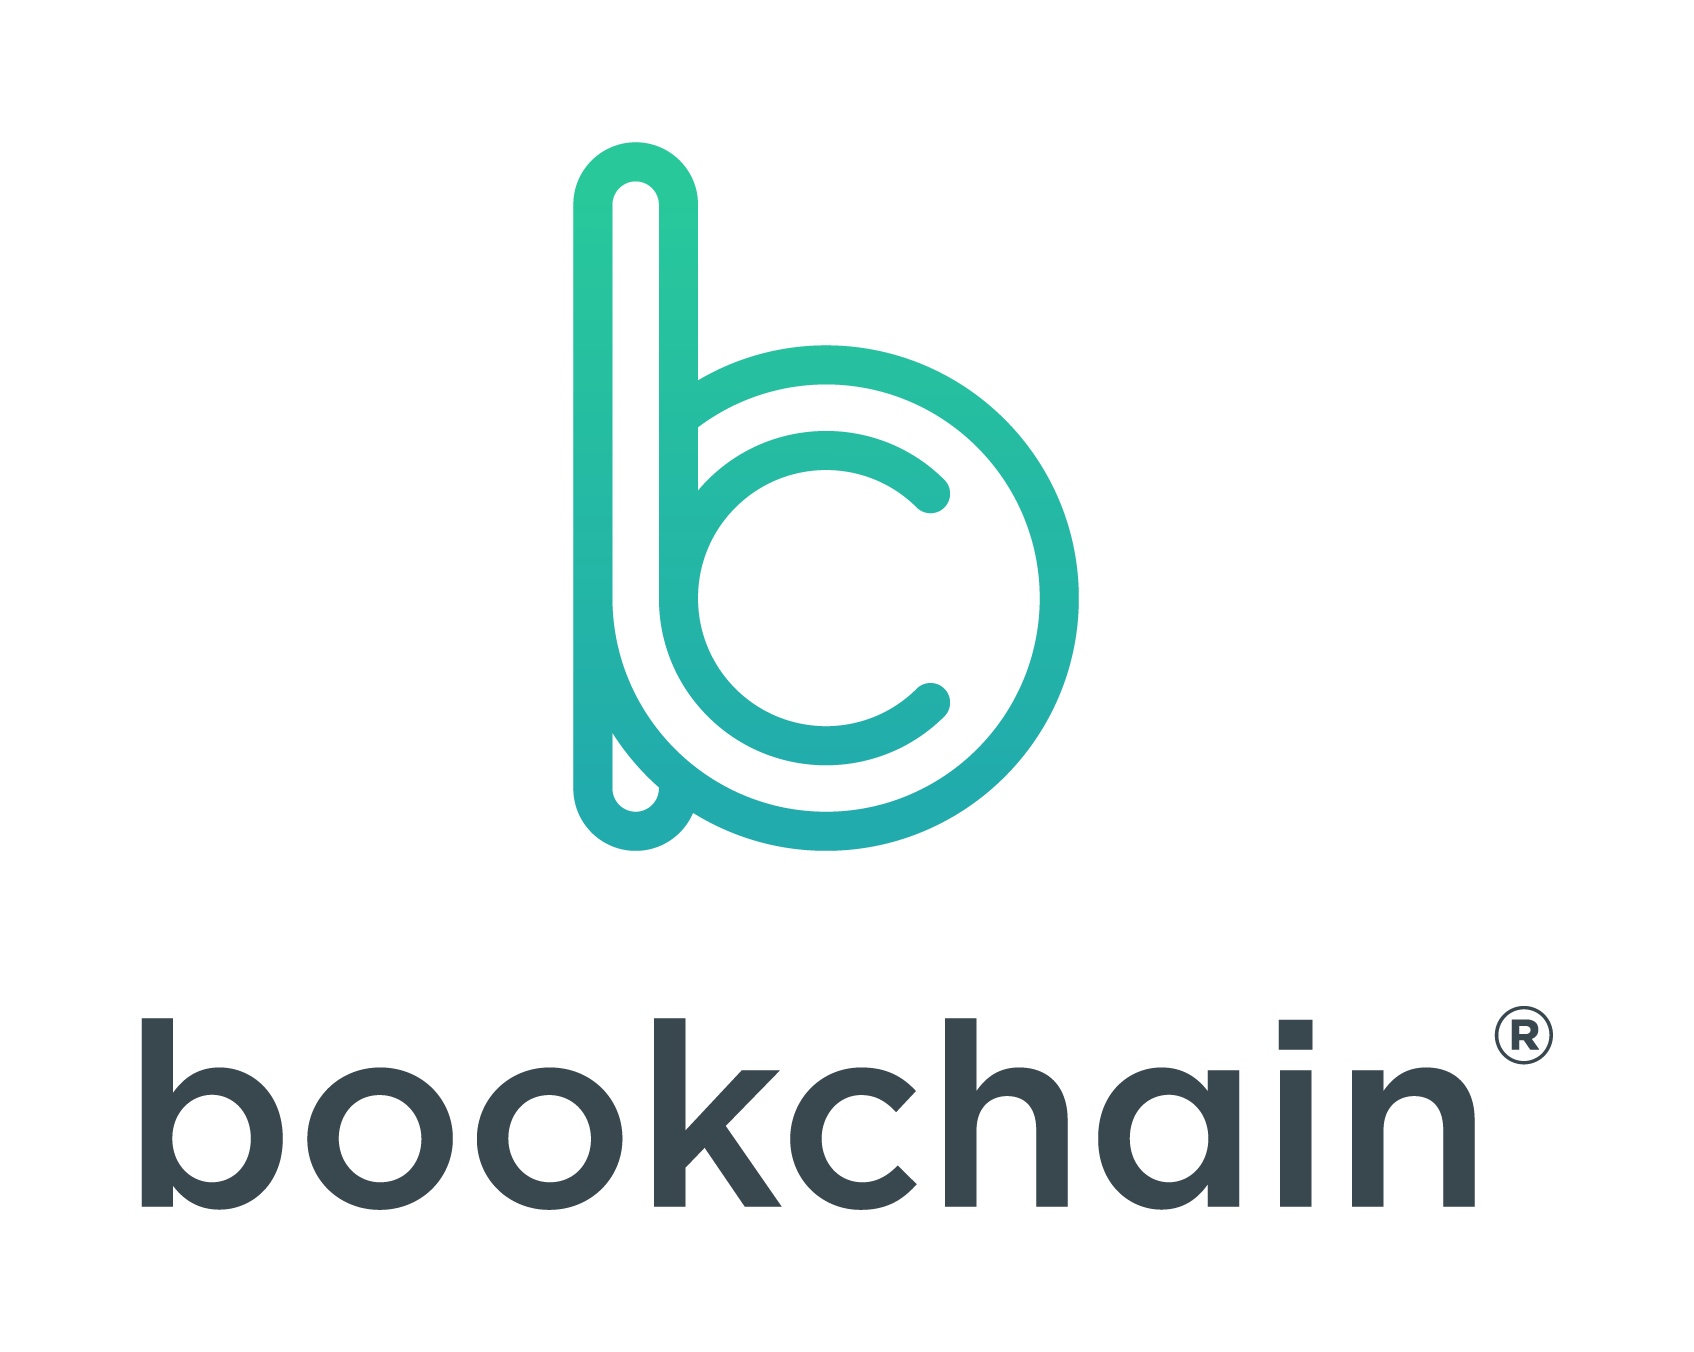 bookchain logo